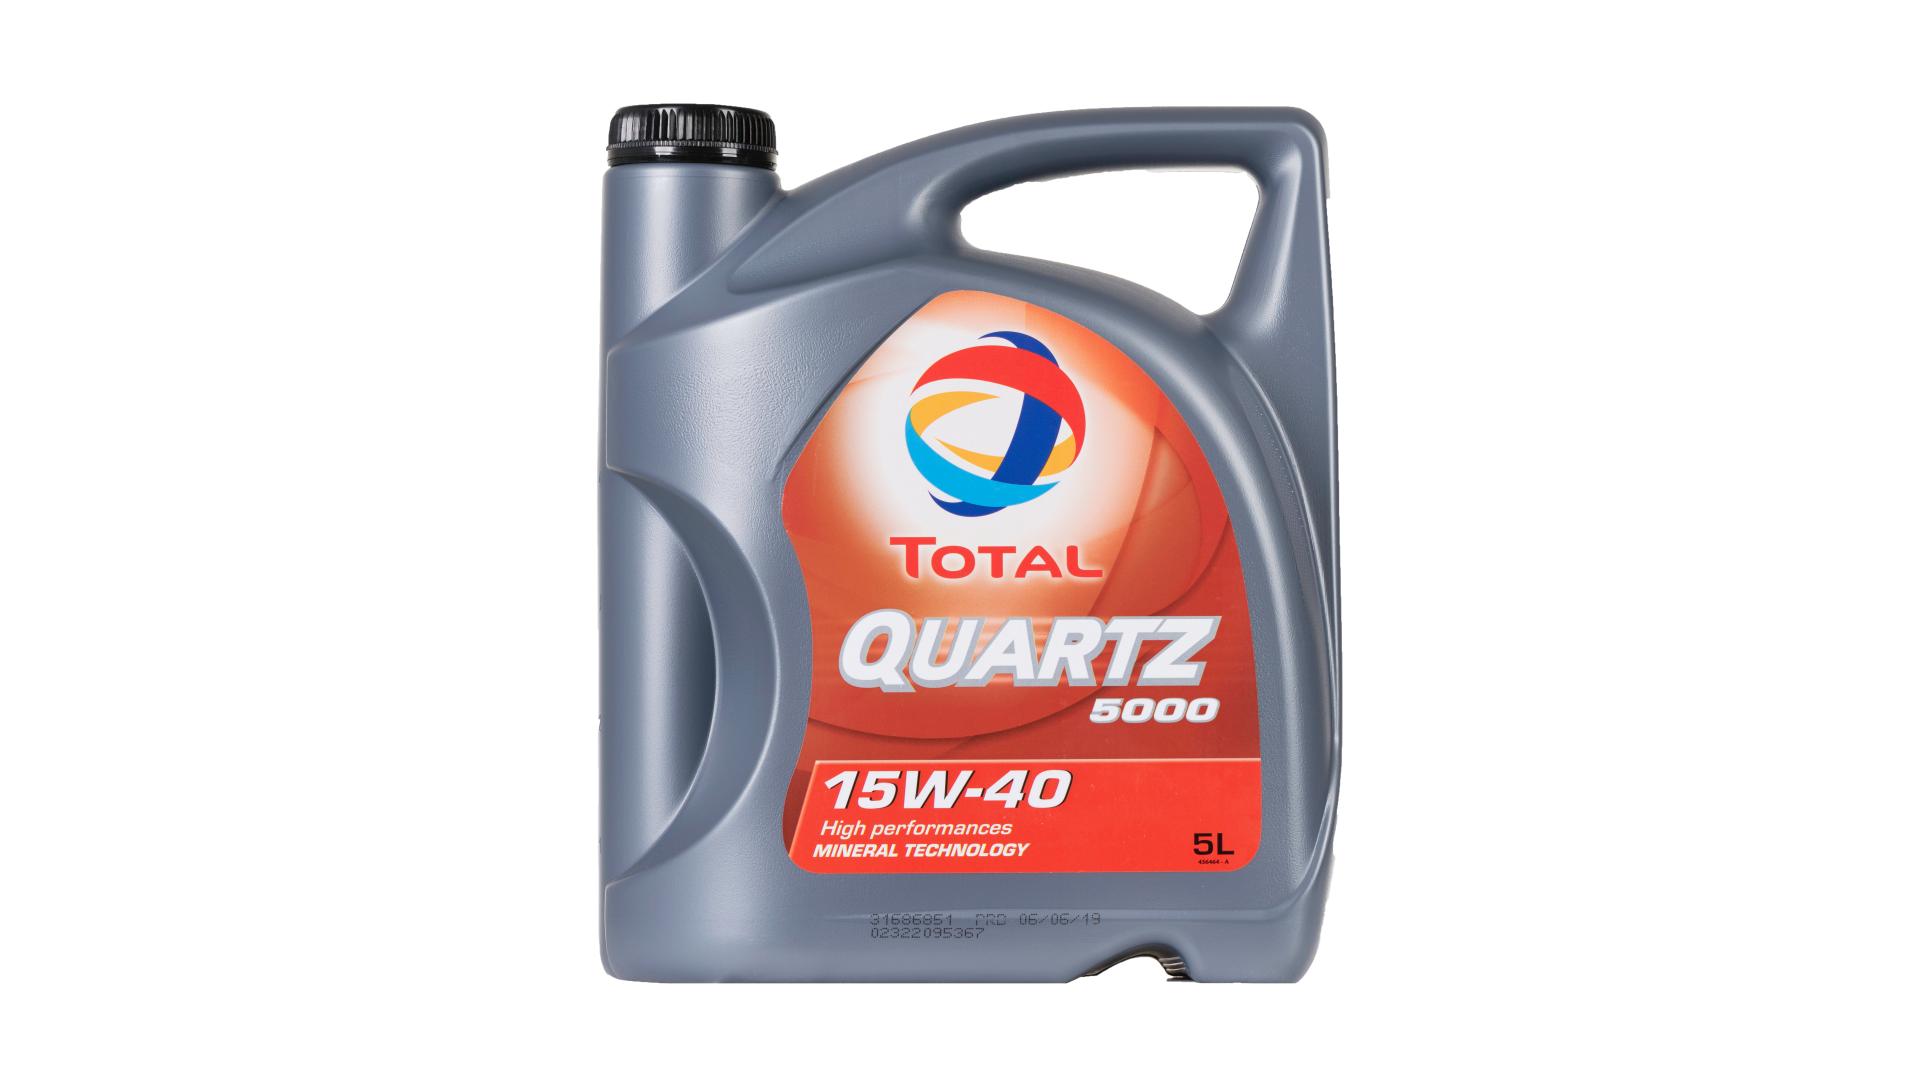 Total 15w-40 Quartz 5000 5L (148645)